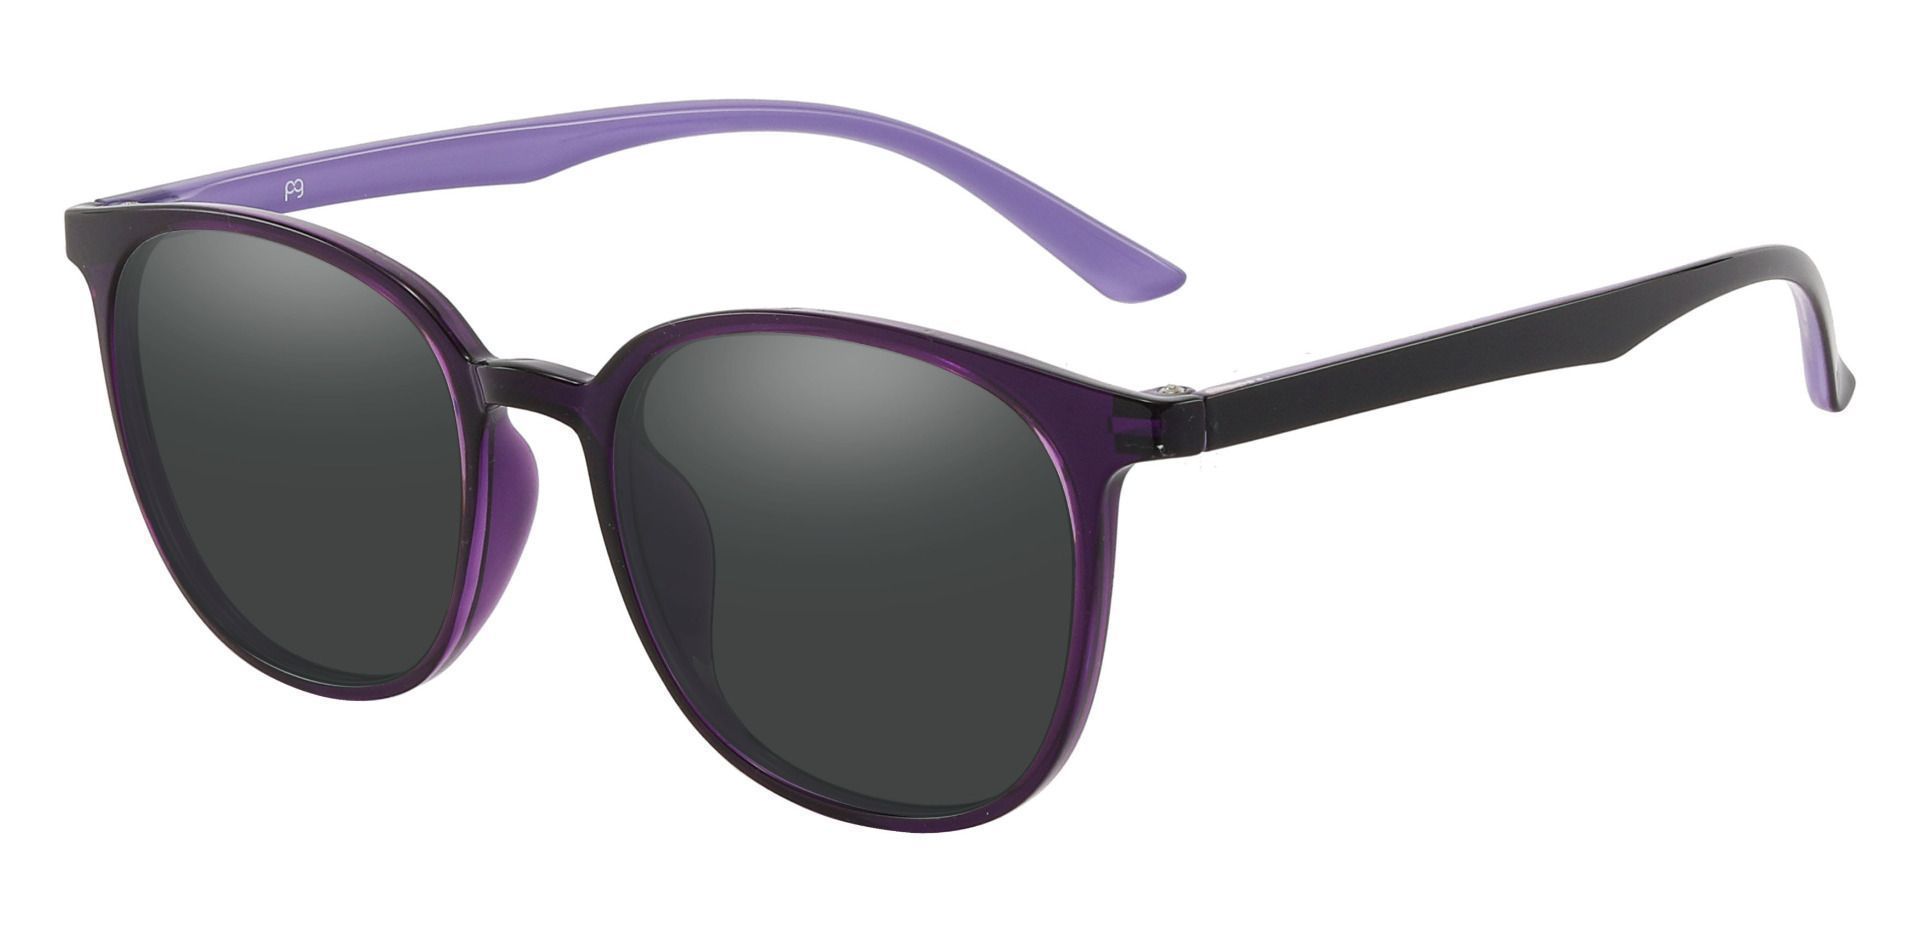 Kelso Square Prescription Sunglasses - Purple Frame With Gray Lenses